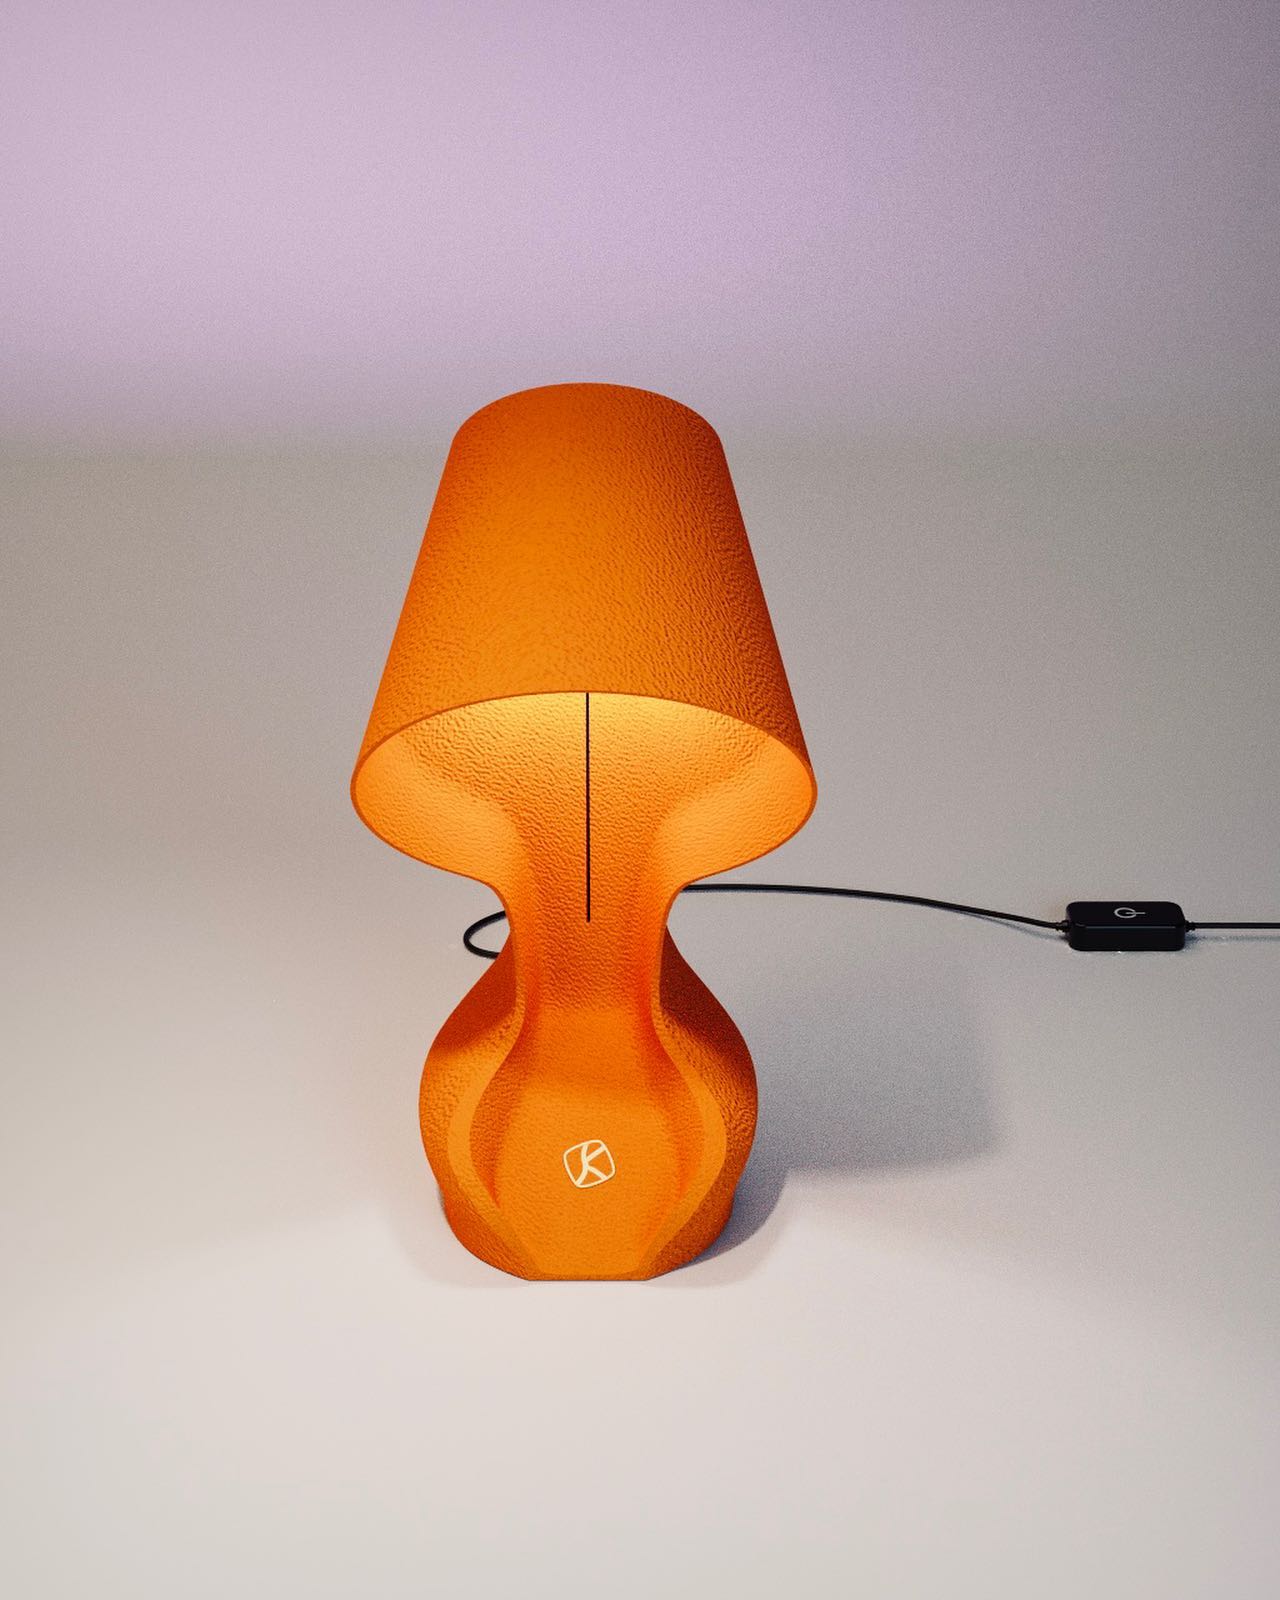 organic lamp design